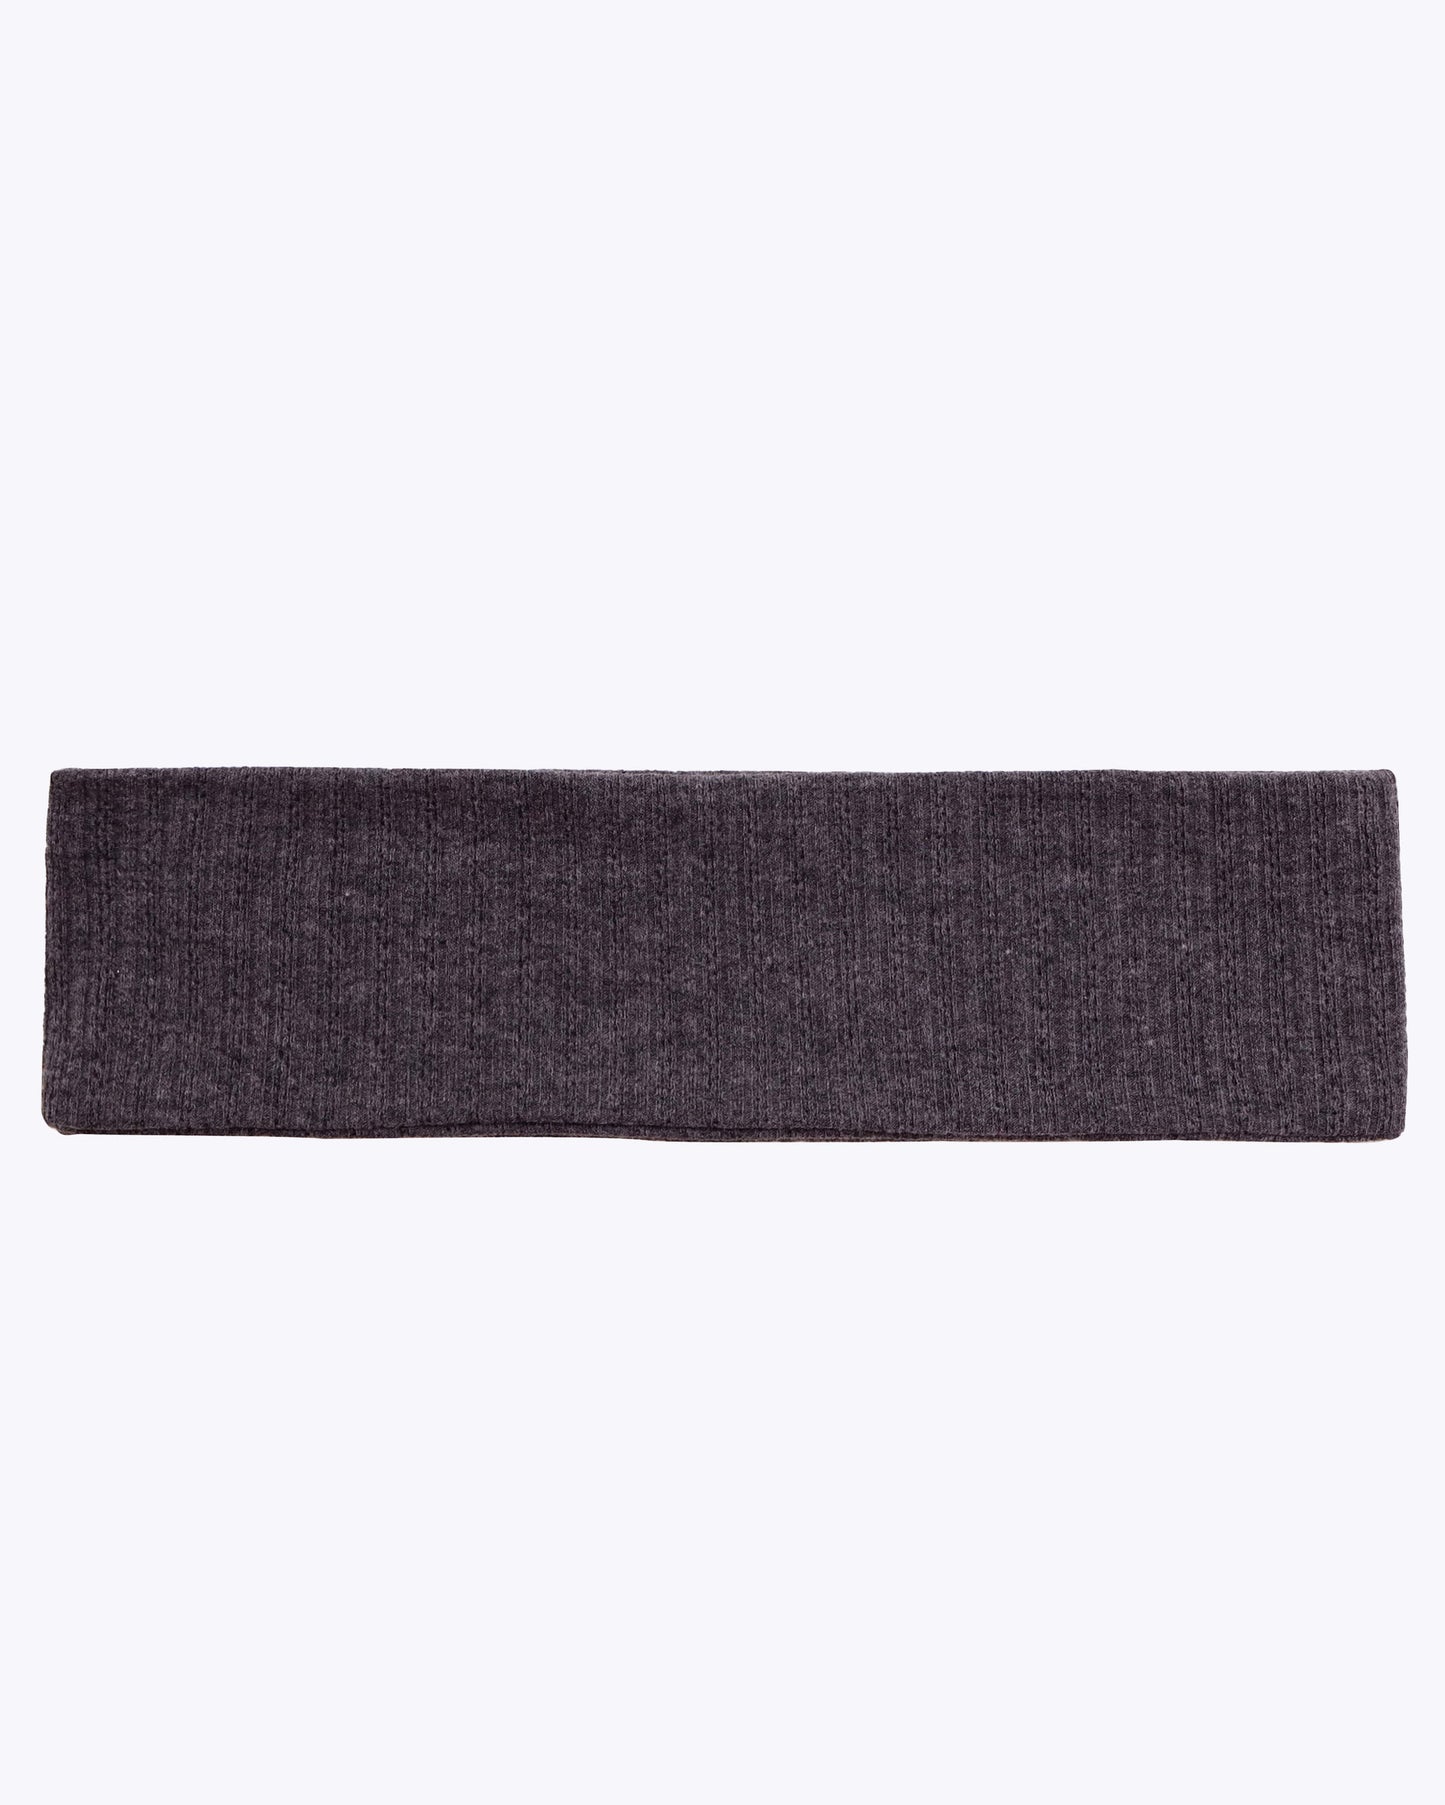 The Violetta Headband in Dusty Gray